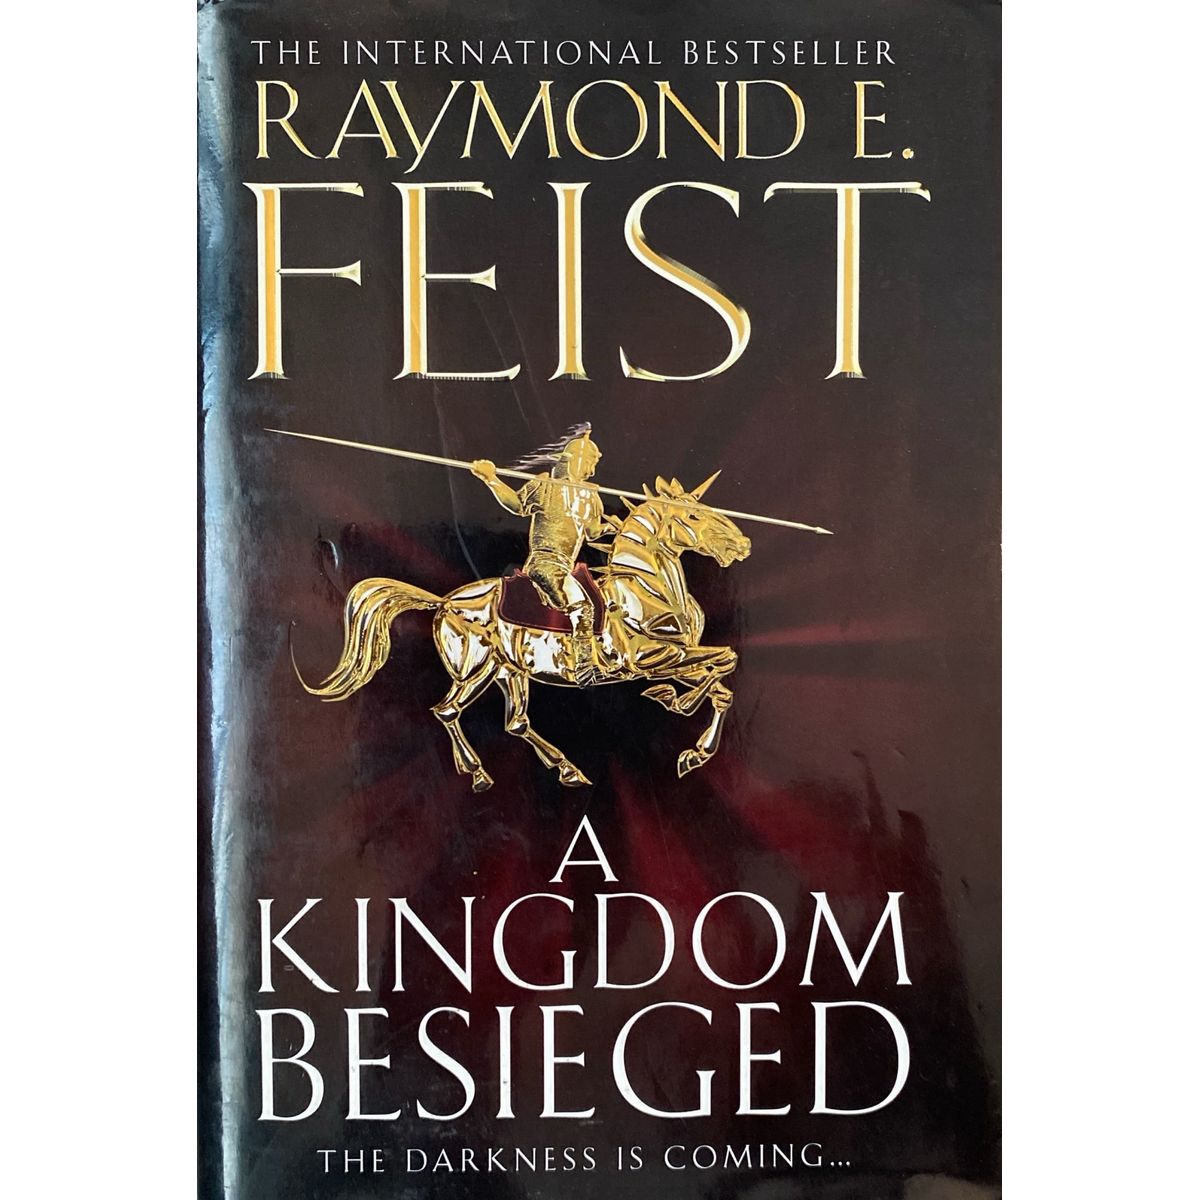 ISBN: 9780007264766 / 0007264763 - A Kingdom Besieged by Raymond E. Feist [2011]